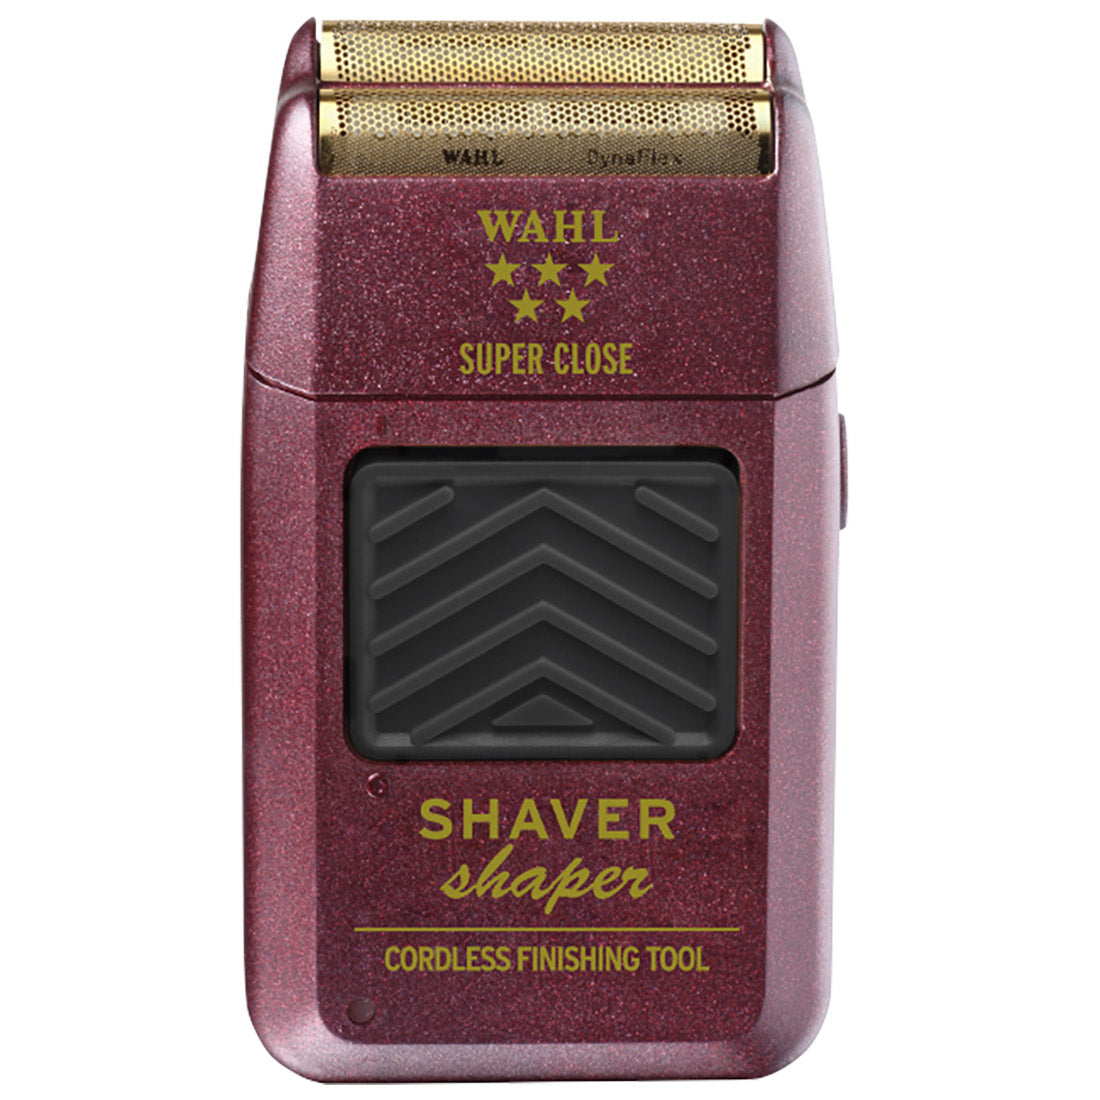 Wahl Professional 5 Star Cordless Shaver Shaper #8061-100